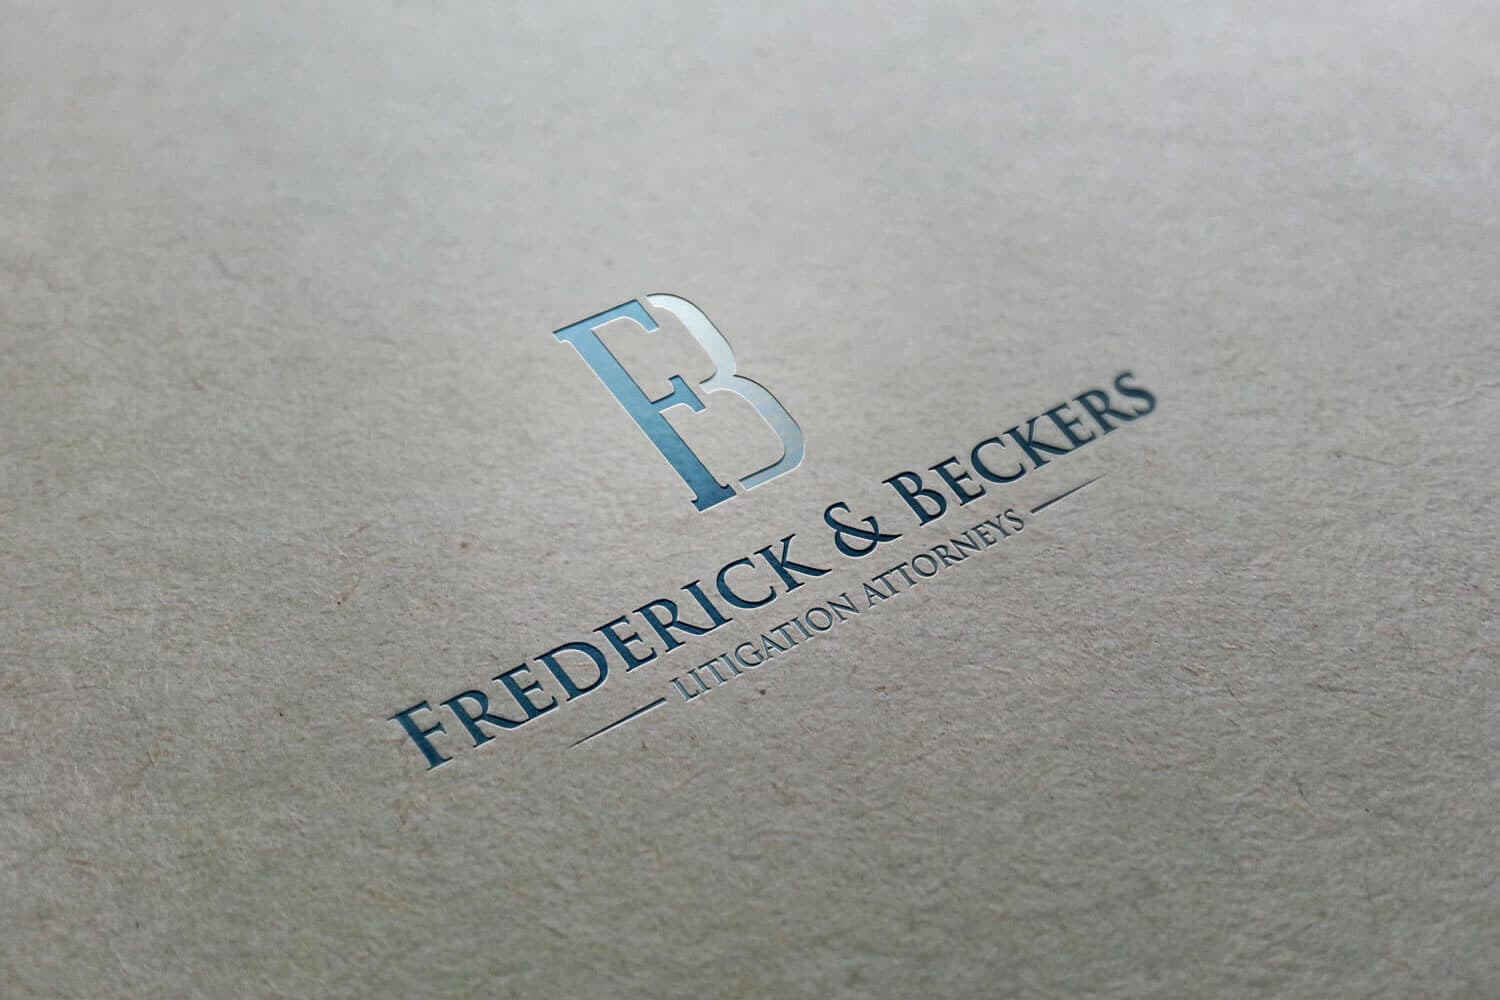 Branding & Logo Design Services for Frederick & Beckers